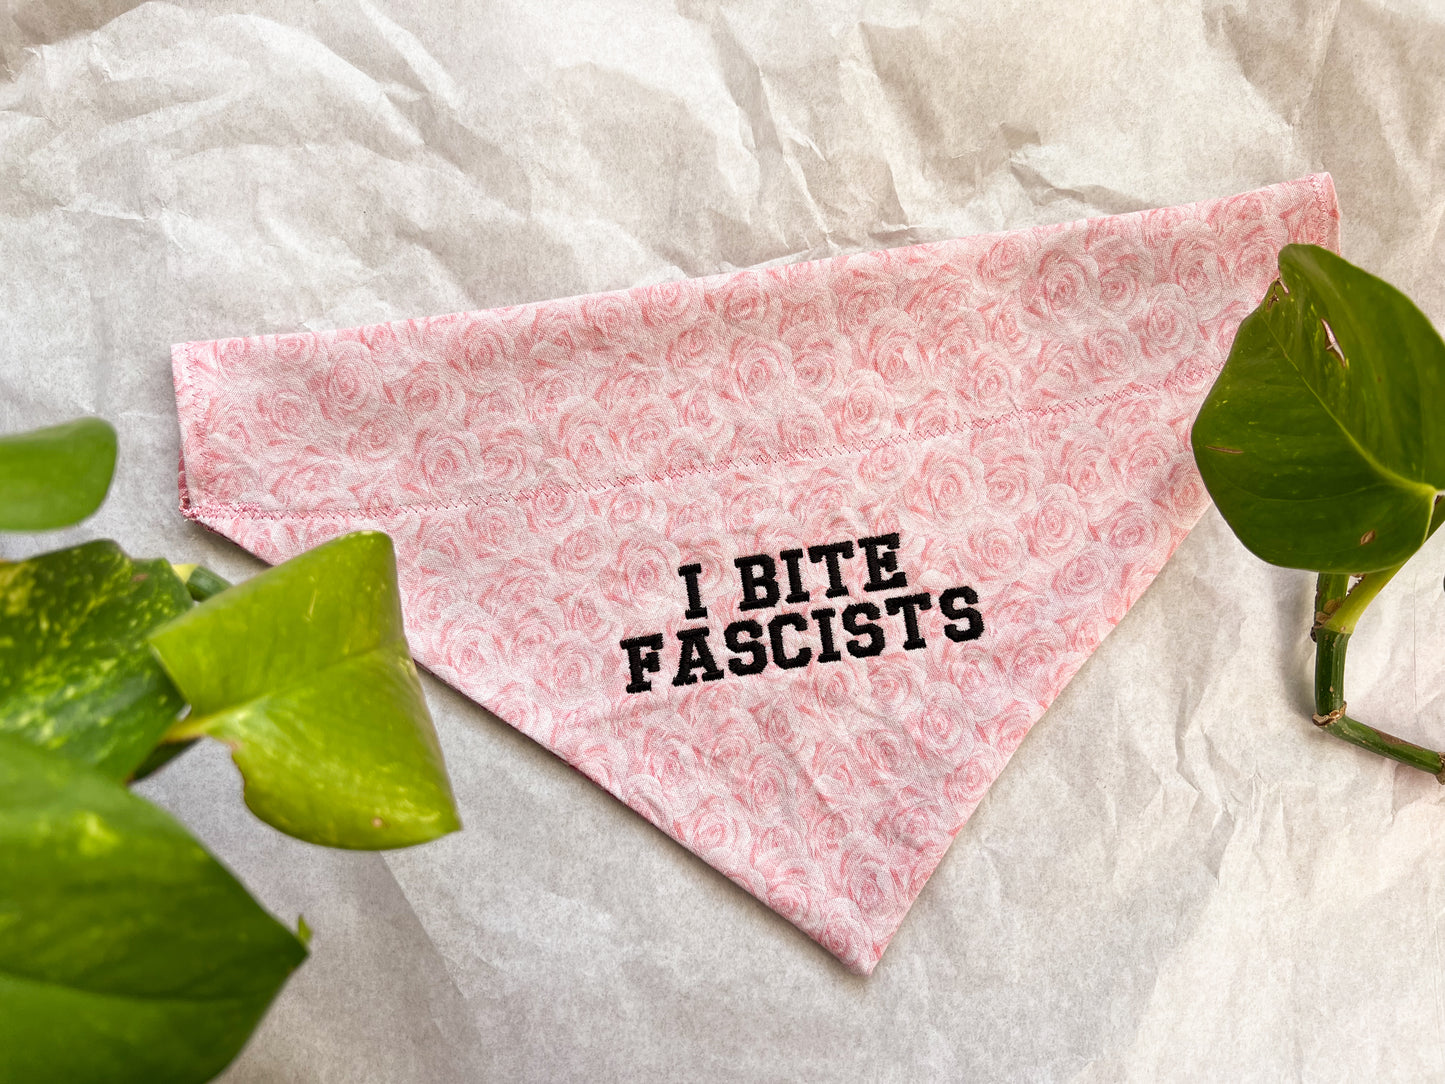 i bite fascists pet bandana pink